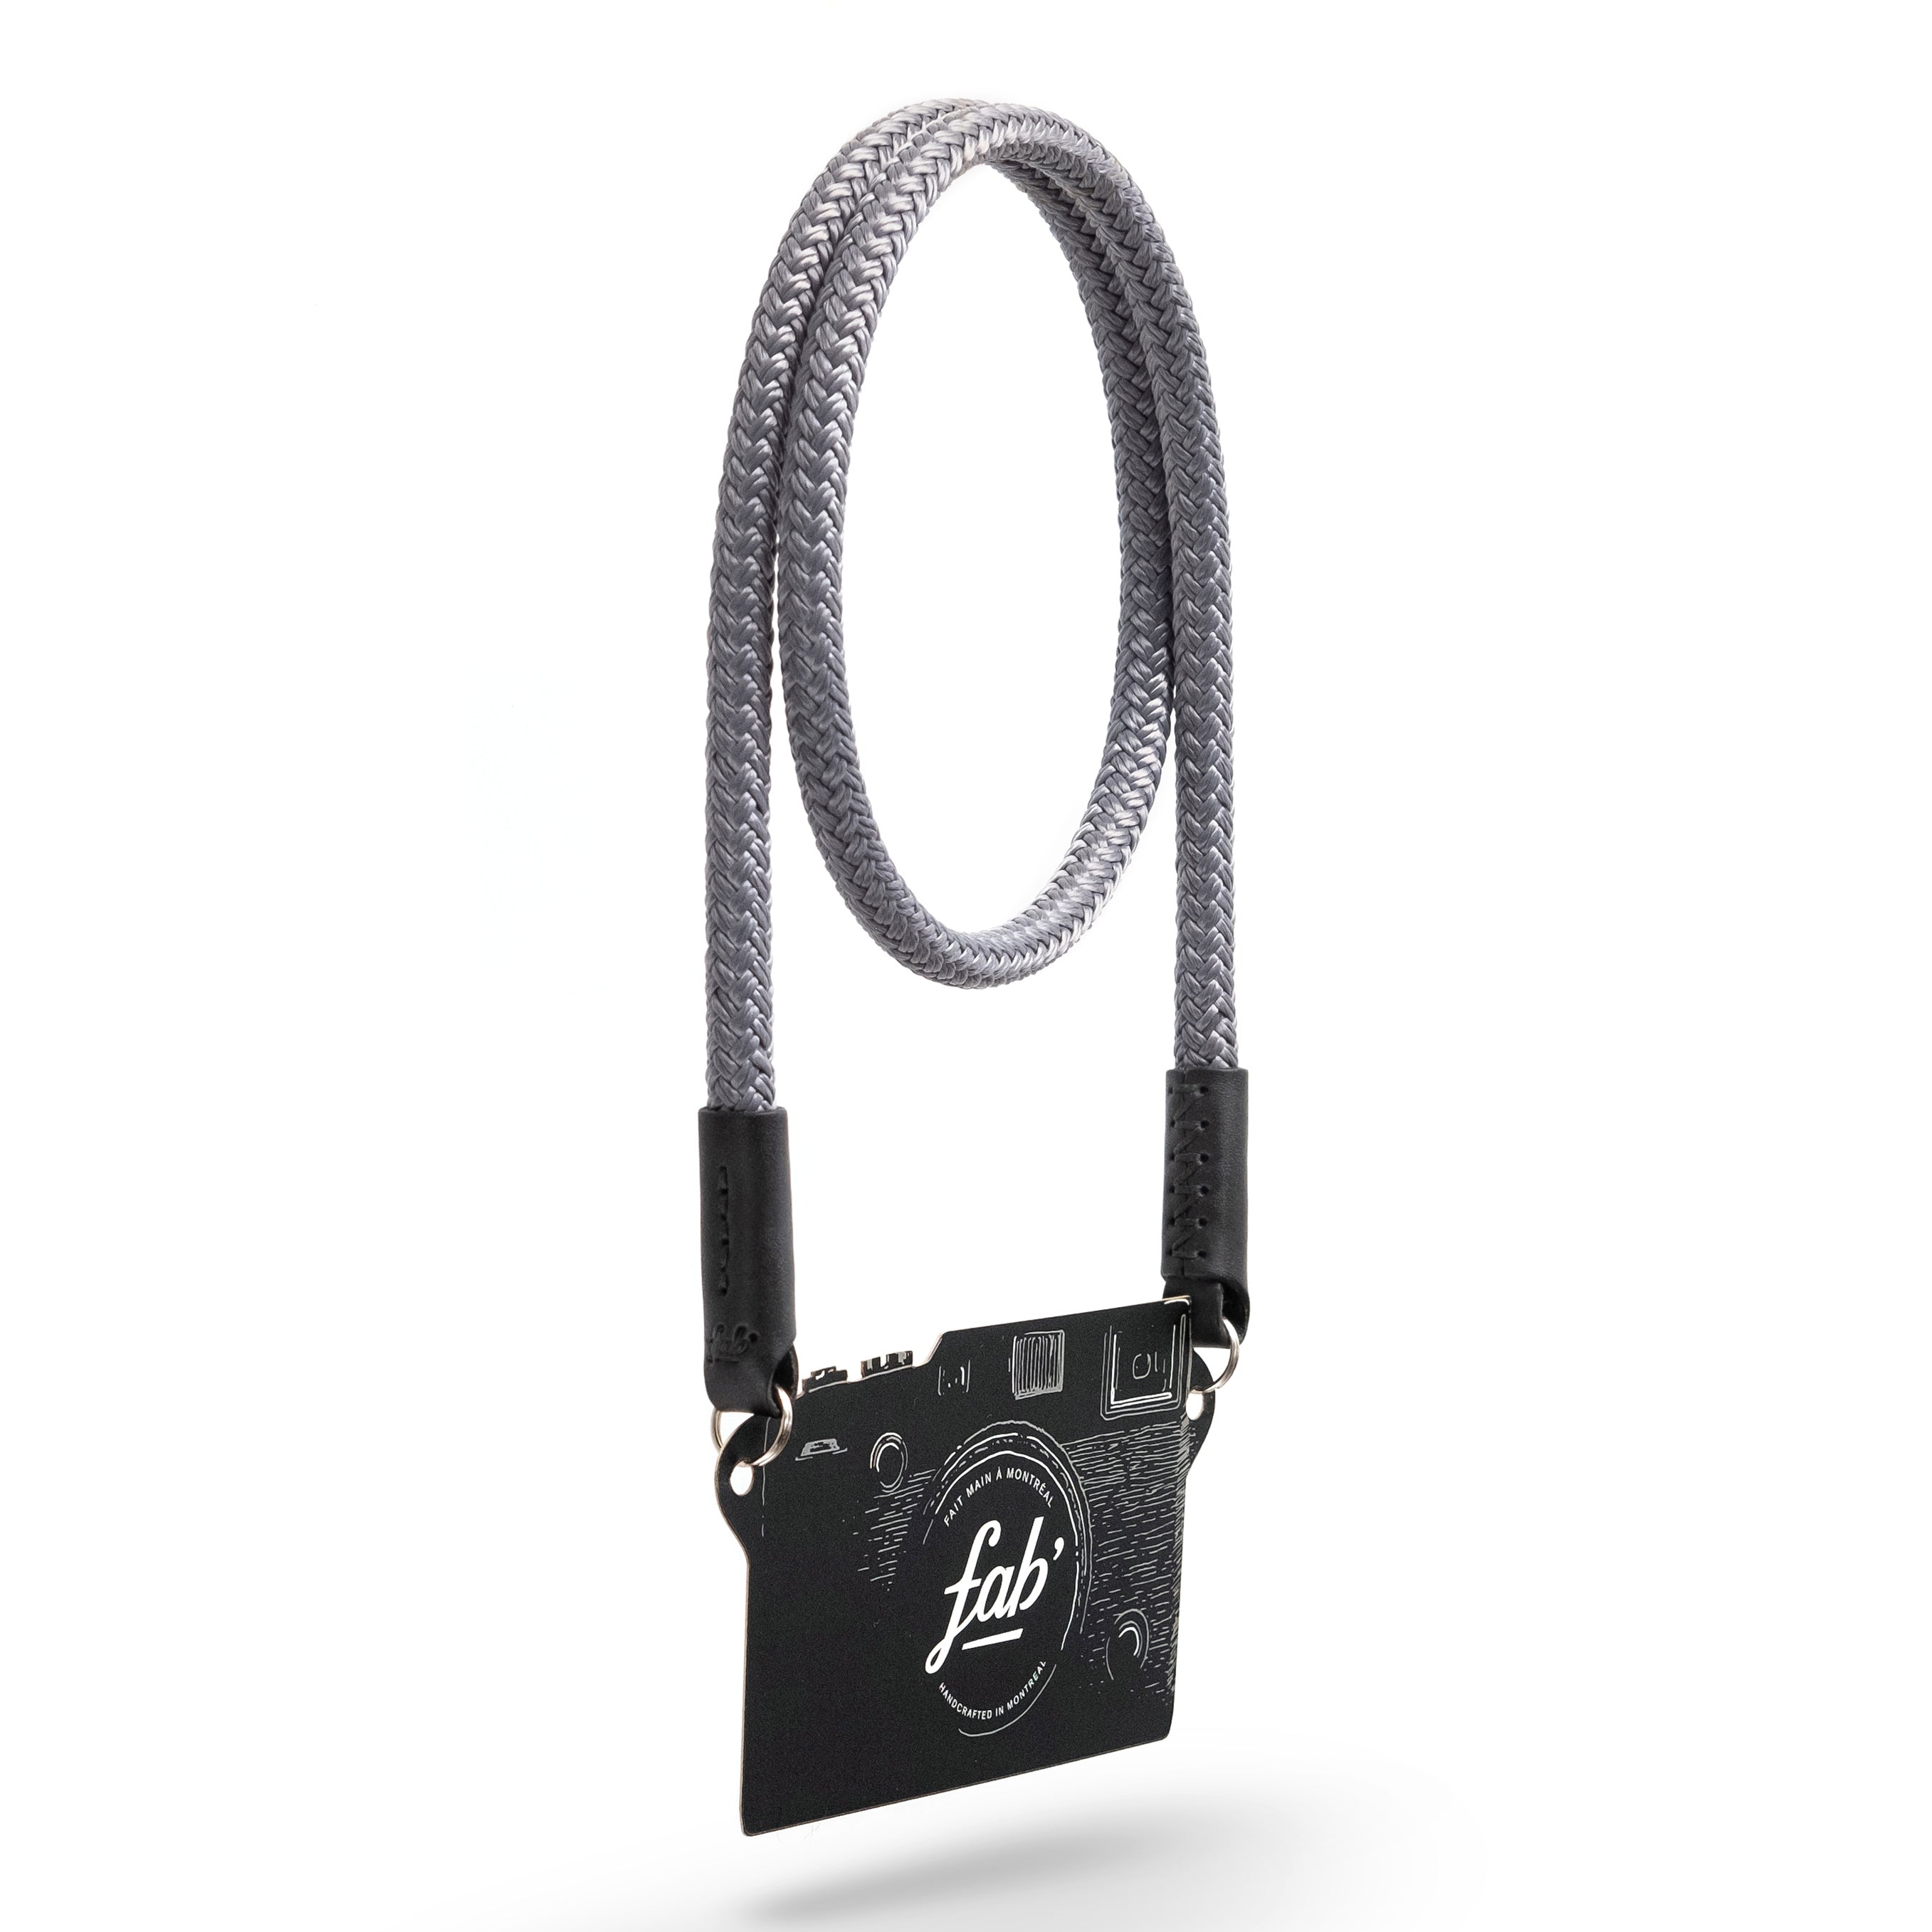 Fab' F8 strap - Grey rope, black leather - Size XL (55")